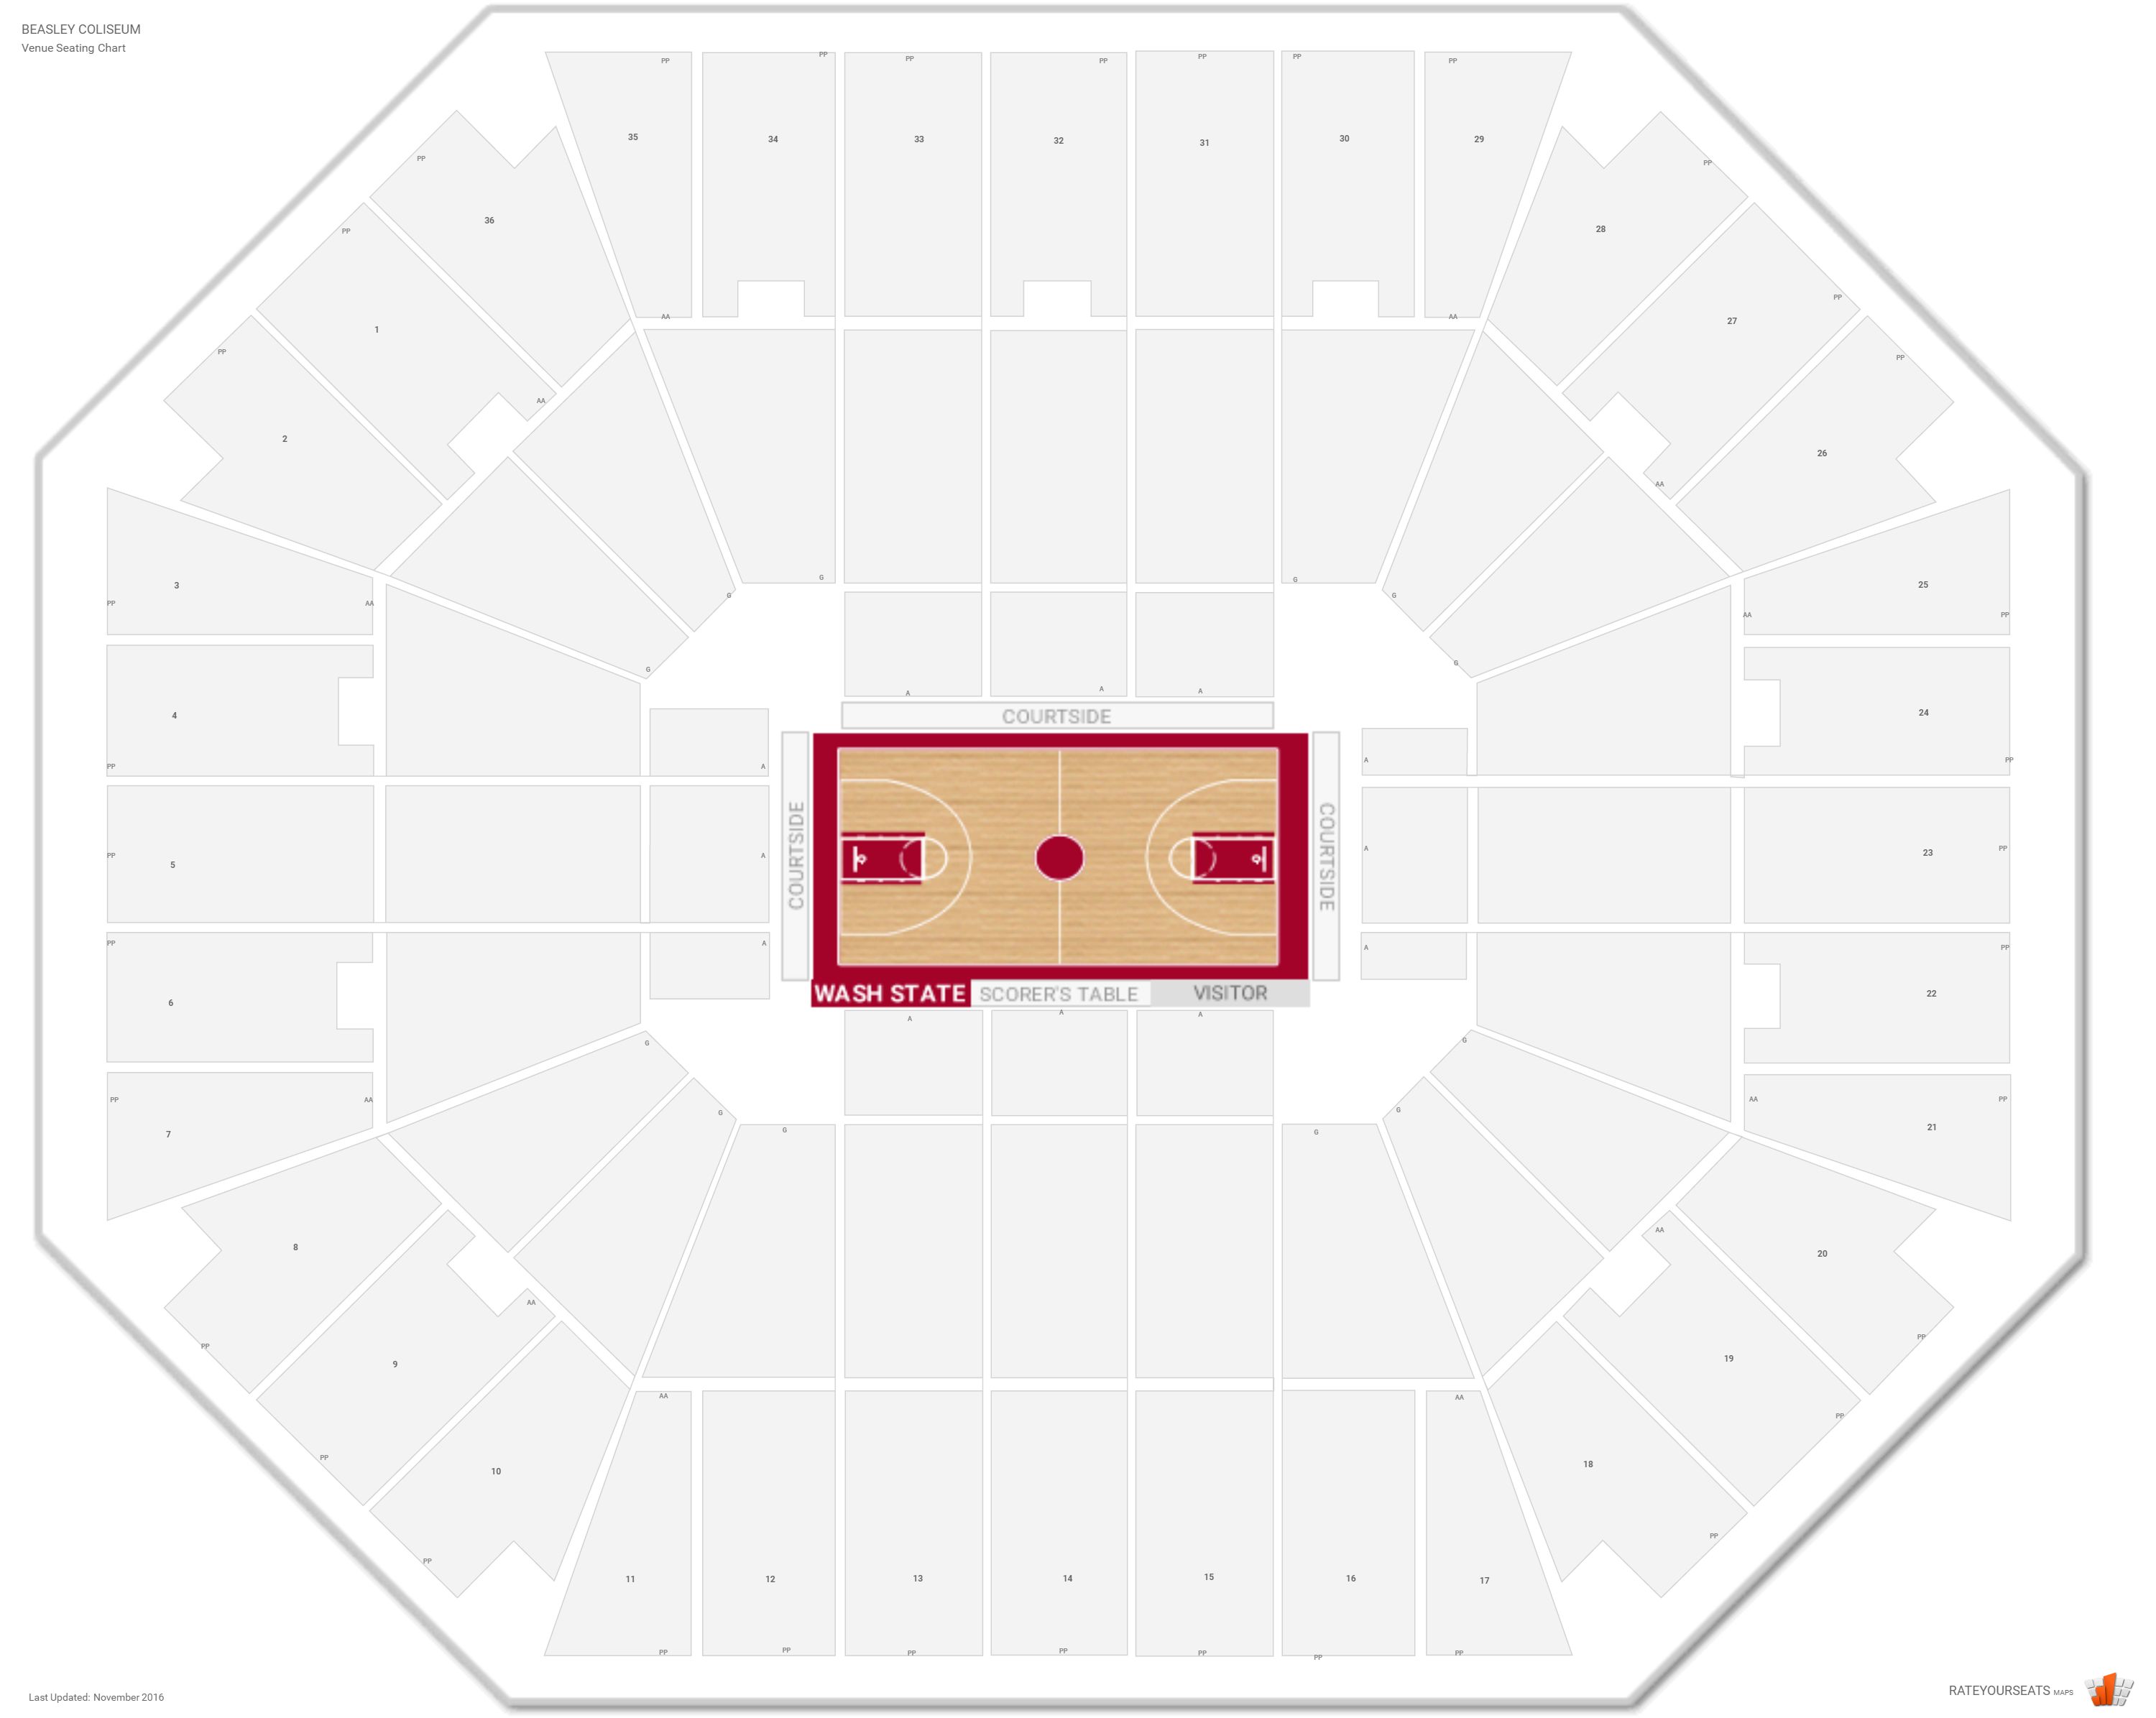 Beasley Coliseum Seating Chart Basketball